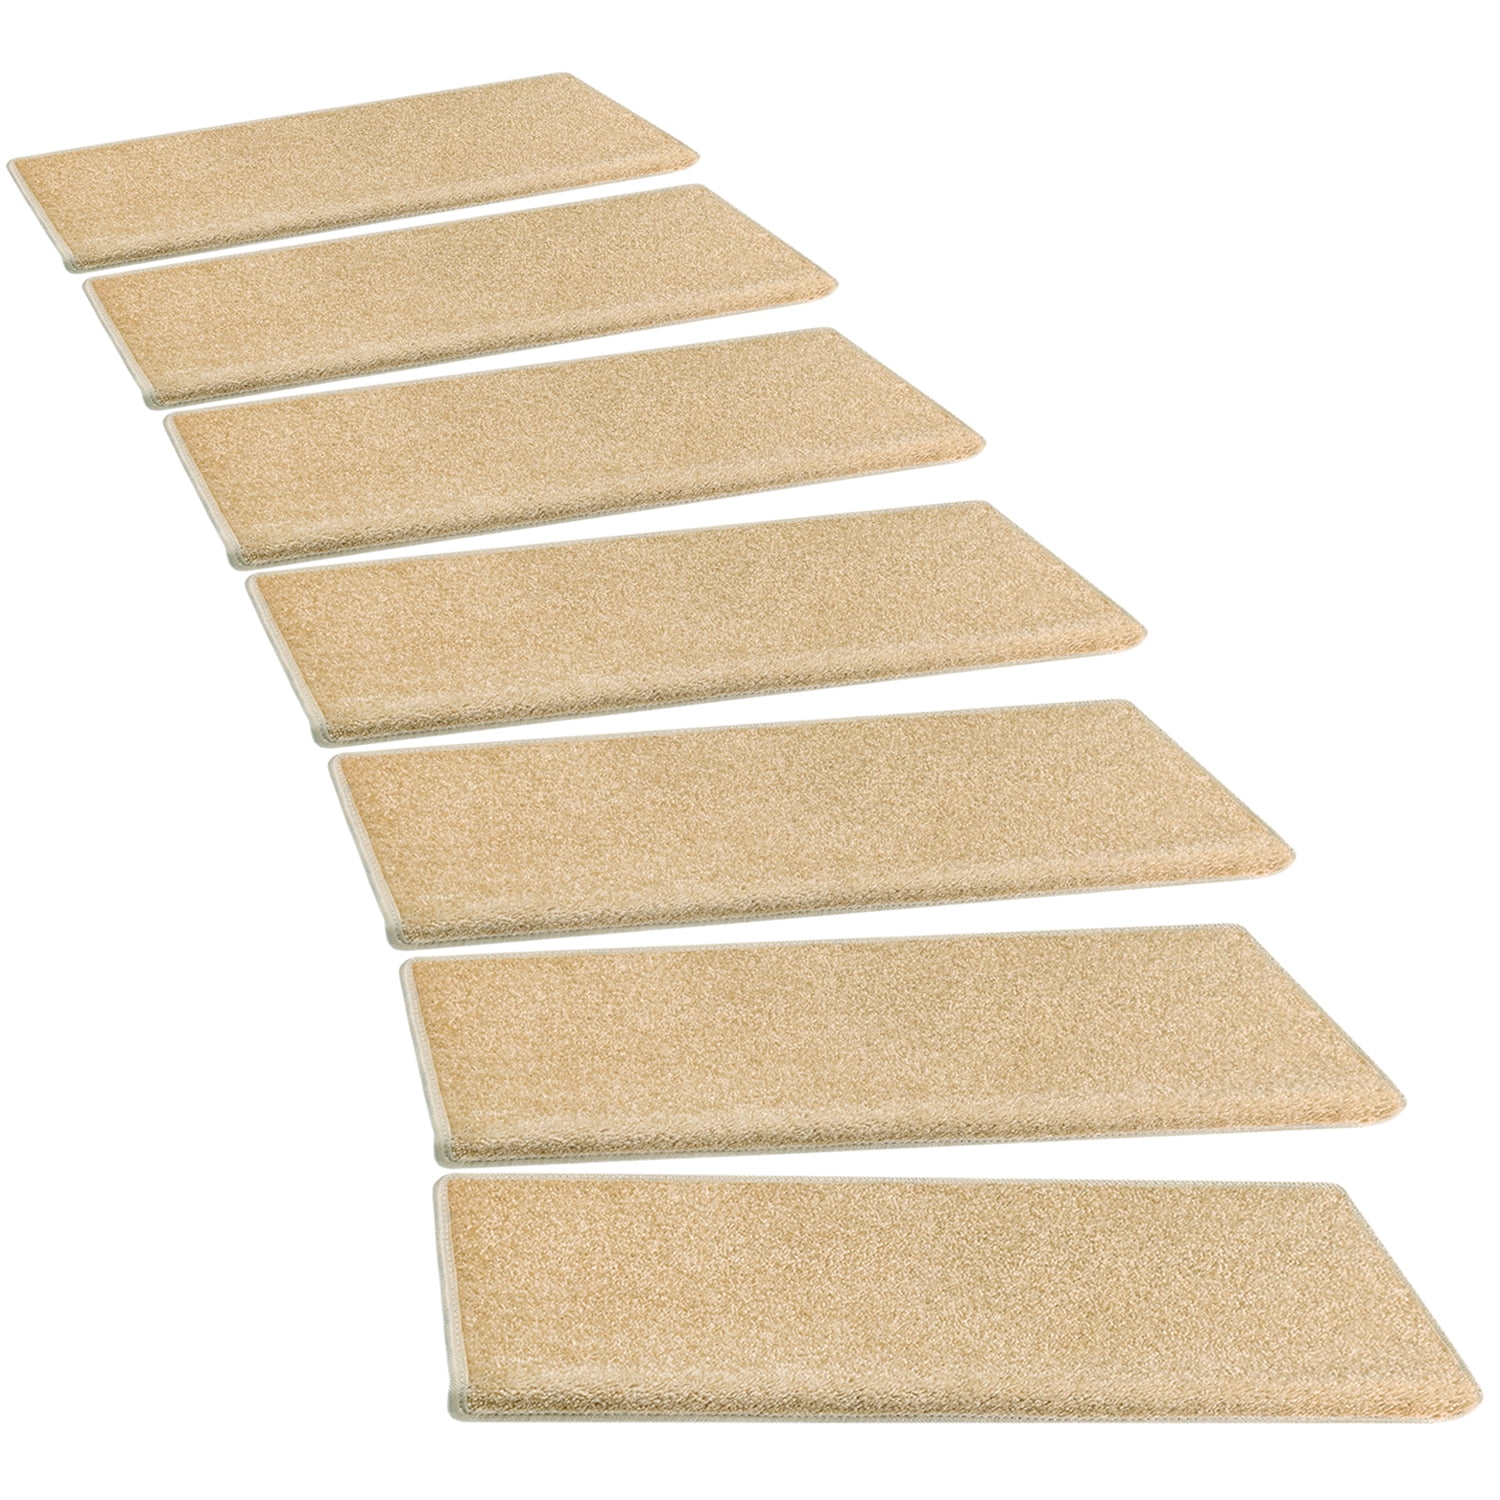 Seloom Non Slip Stair Treads Carpet Set of 7 Blended Jacquard Indoor Skid Resistant Stair Tread Rugs Rubber Backing,26x10,Beige